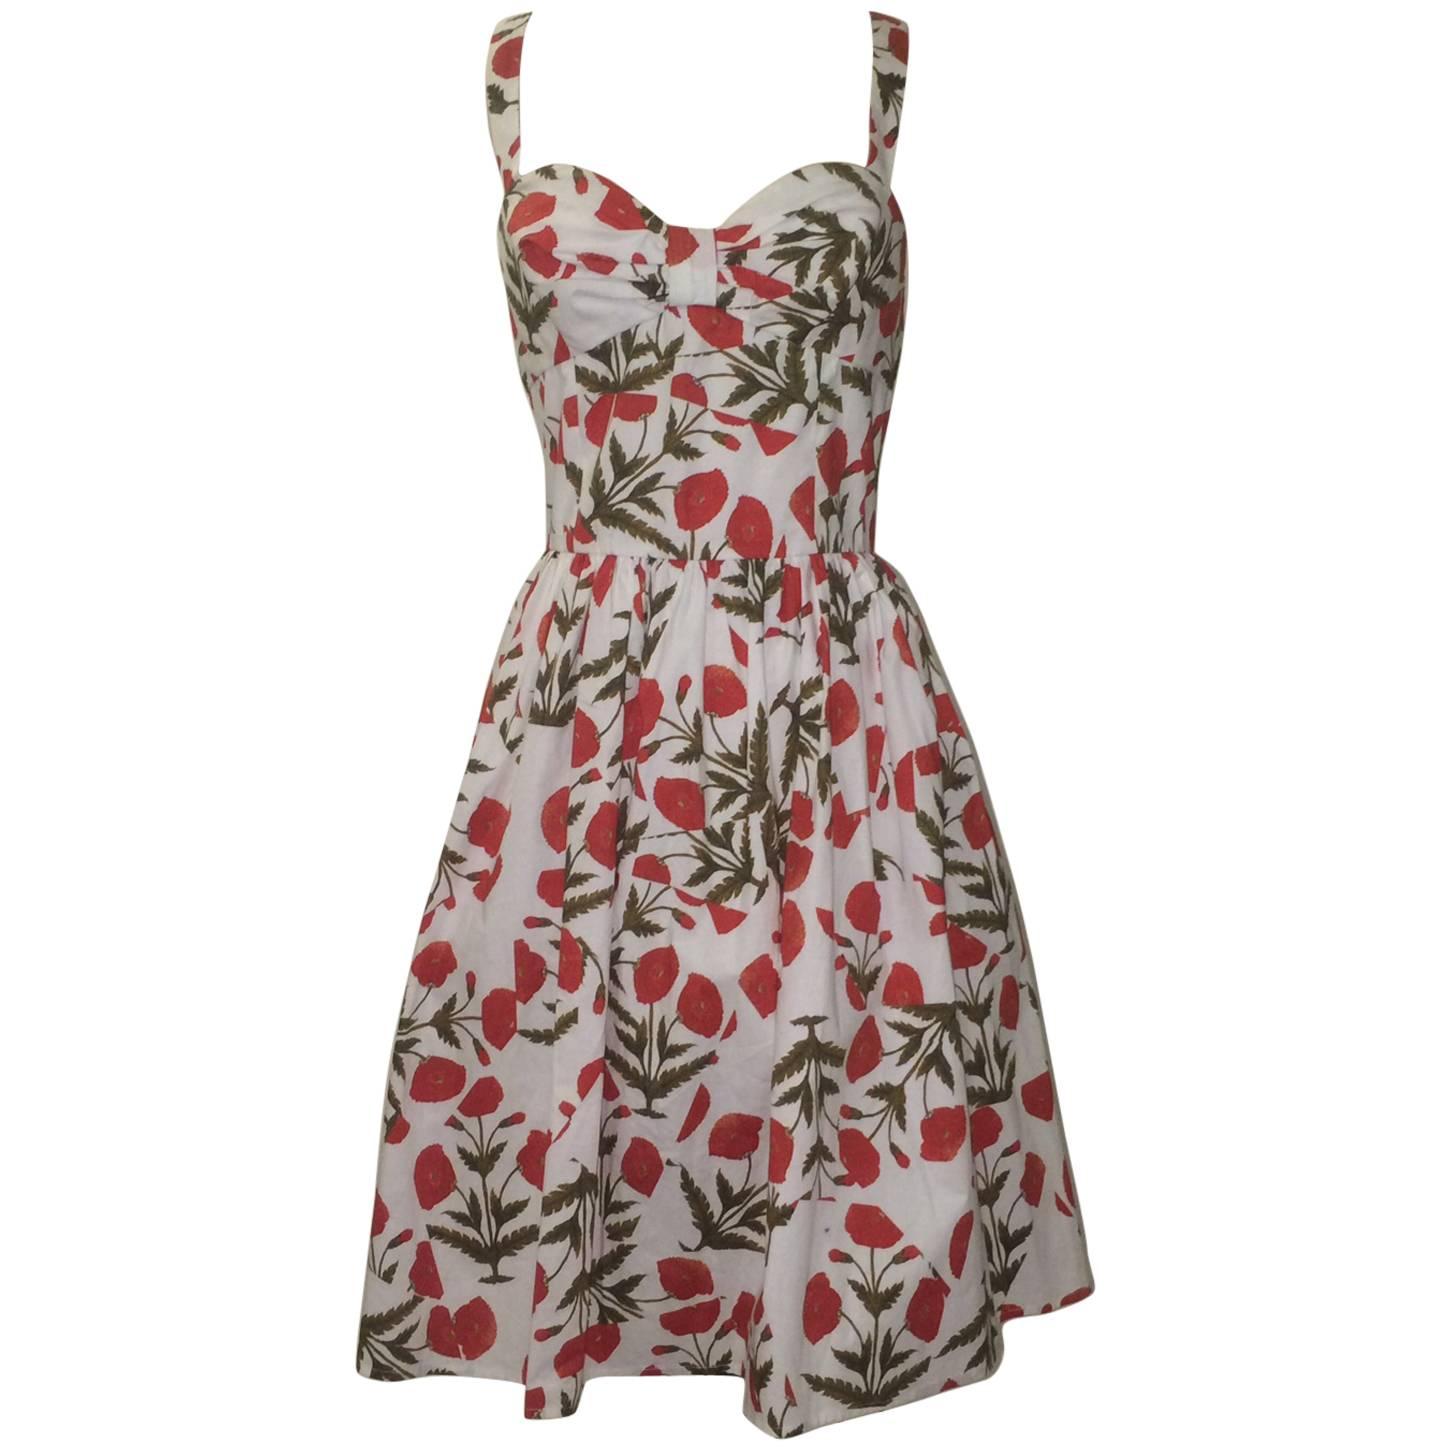 New Oscar de la Renta Spring 2012 Red Poppy Print Cotton Dress